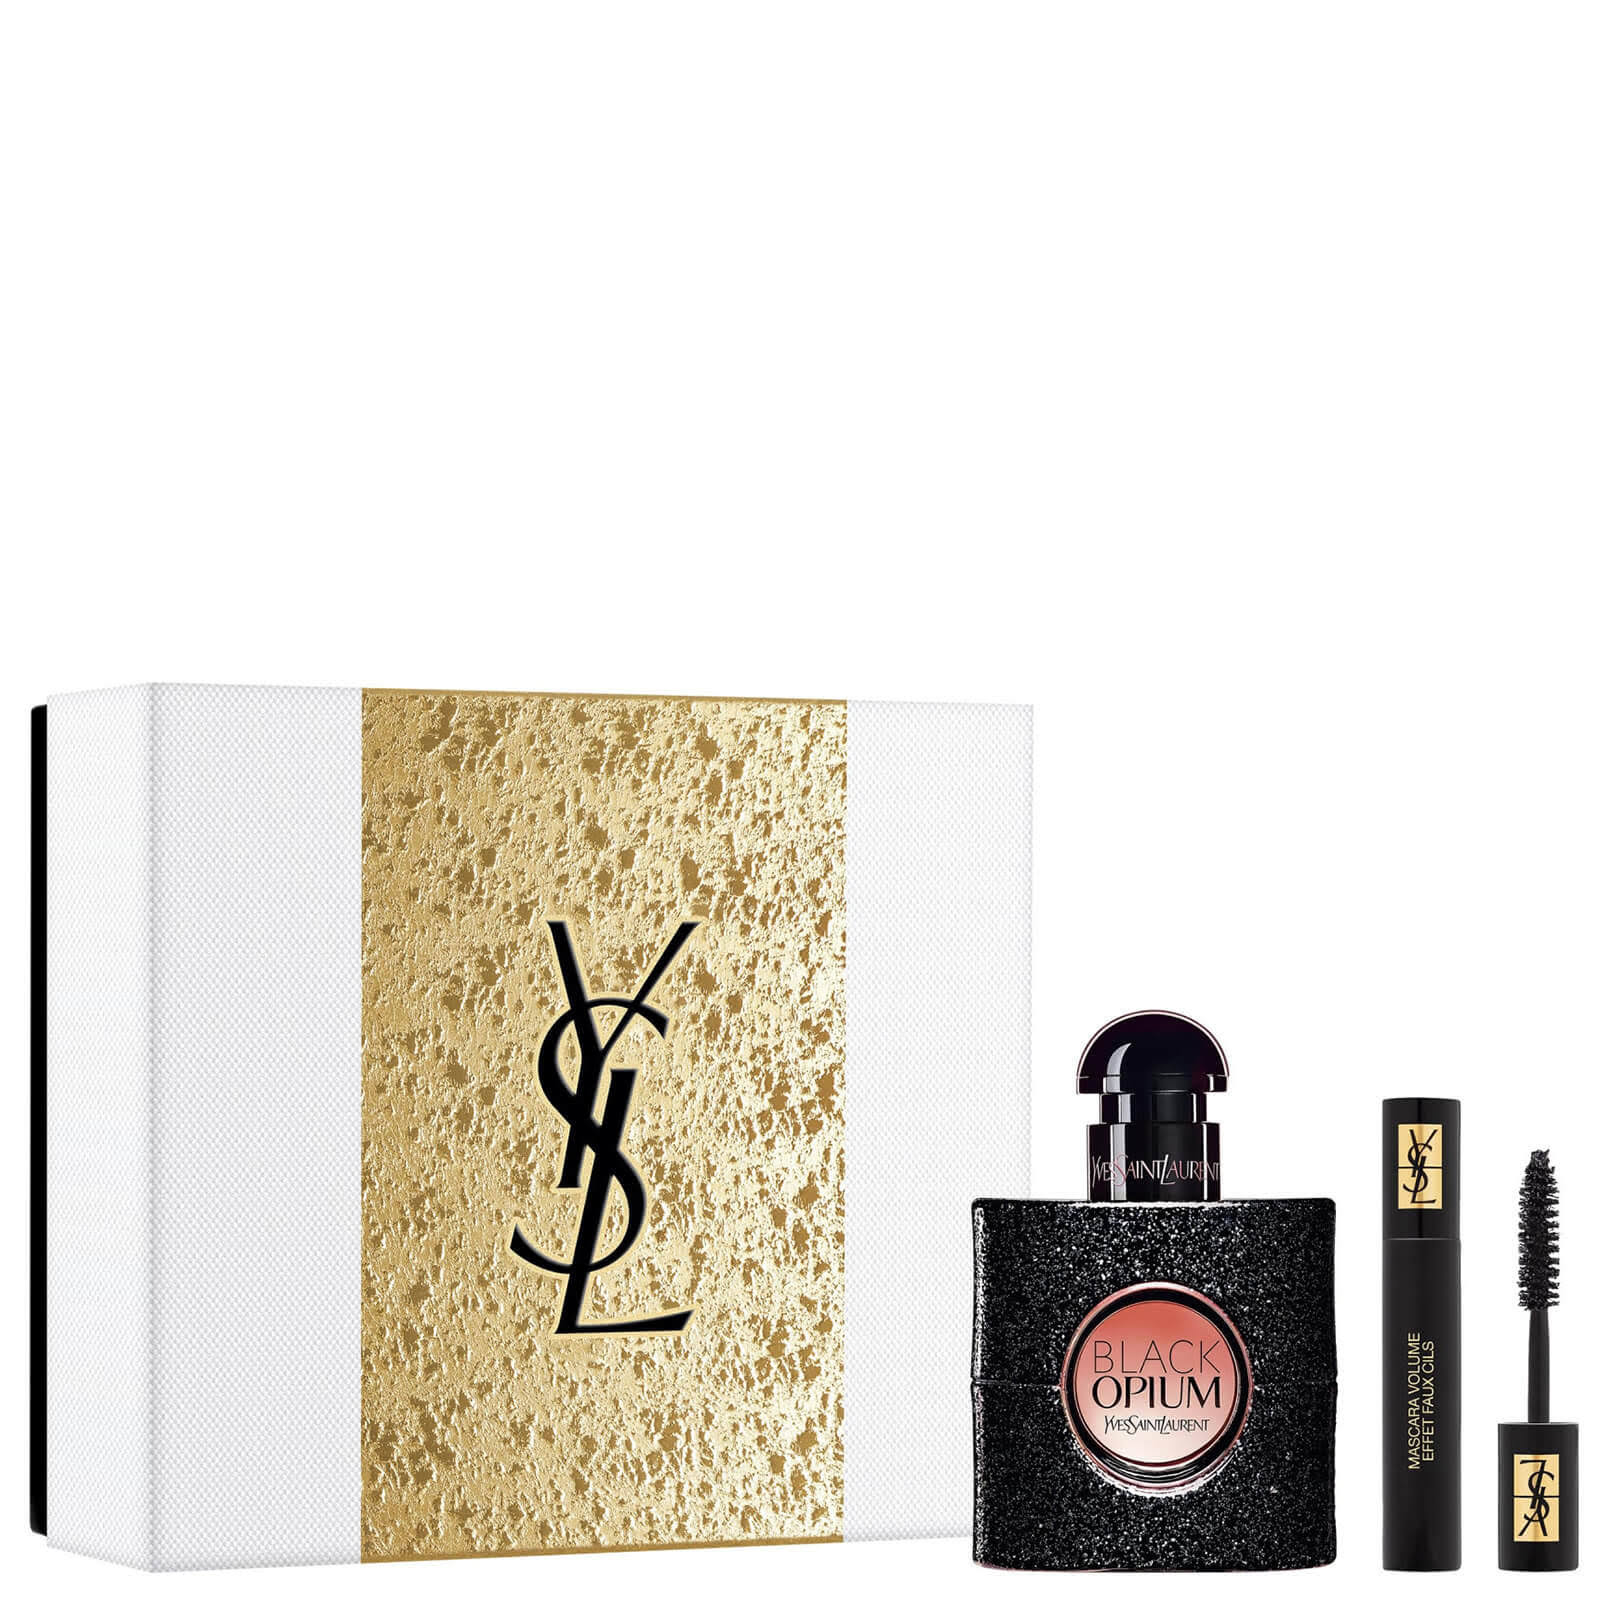 Yves Saint Laurent Black Opium Eau de Parfum 30ml and Mascara Gift Set